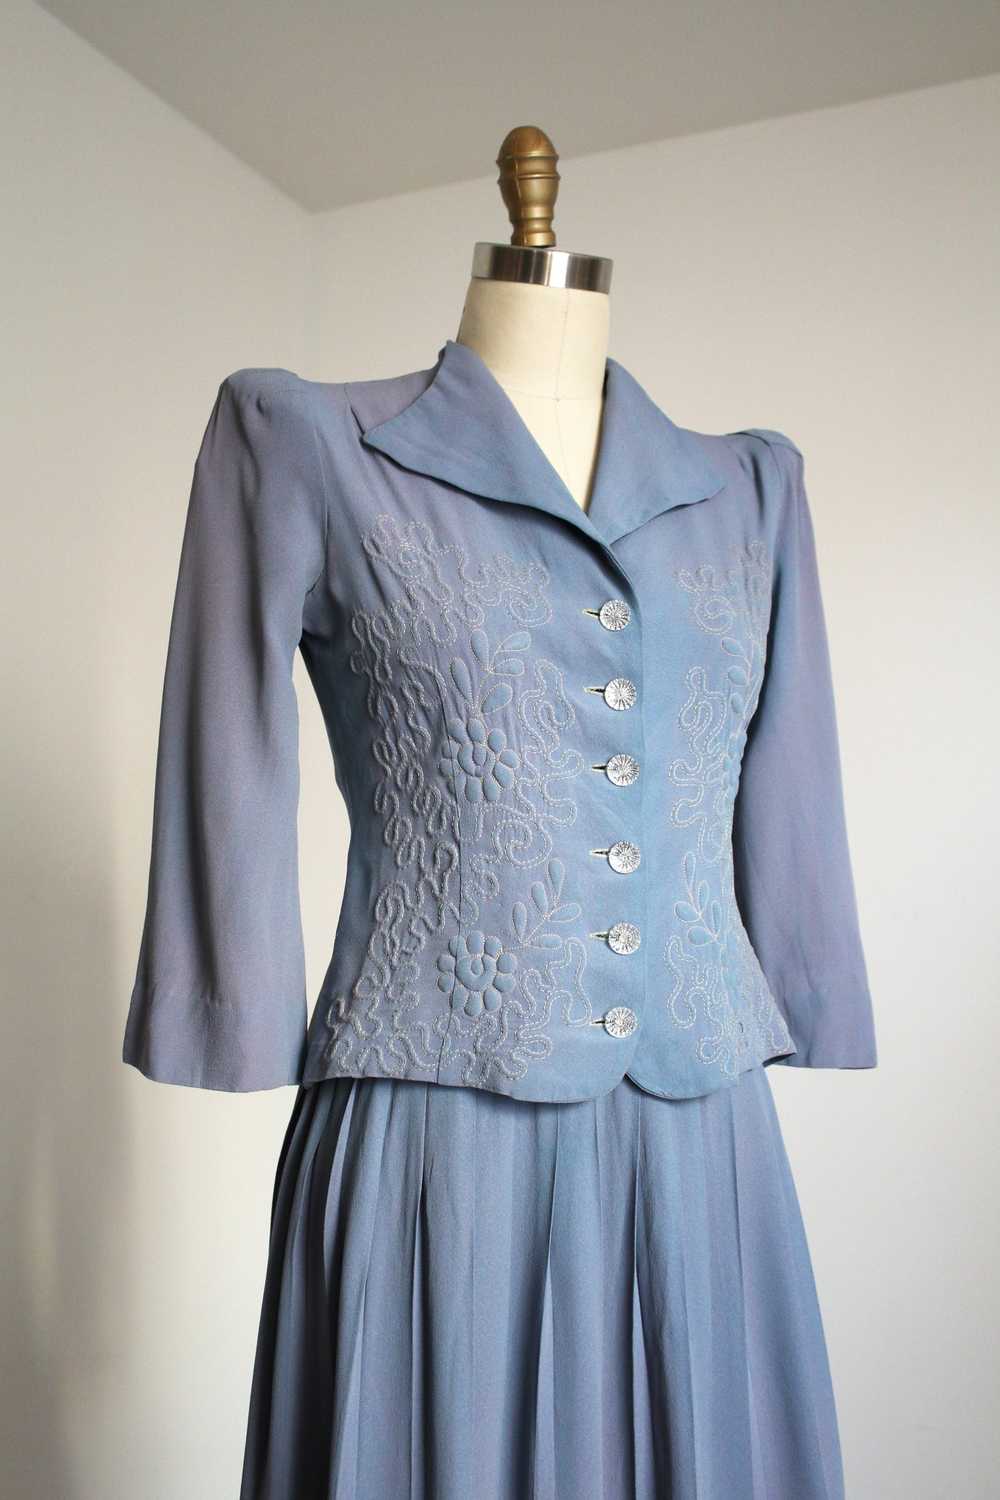 vintage 1930s blue rayon dress set {s} - image 2